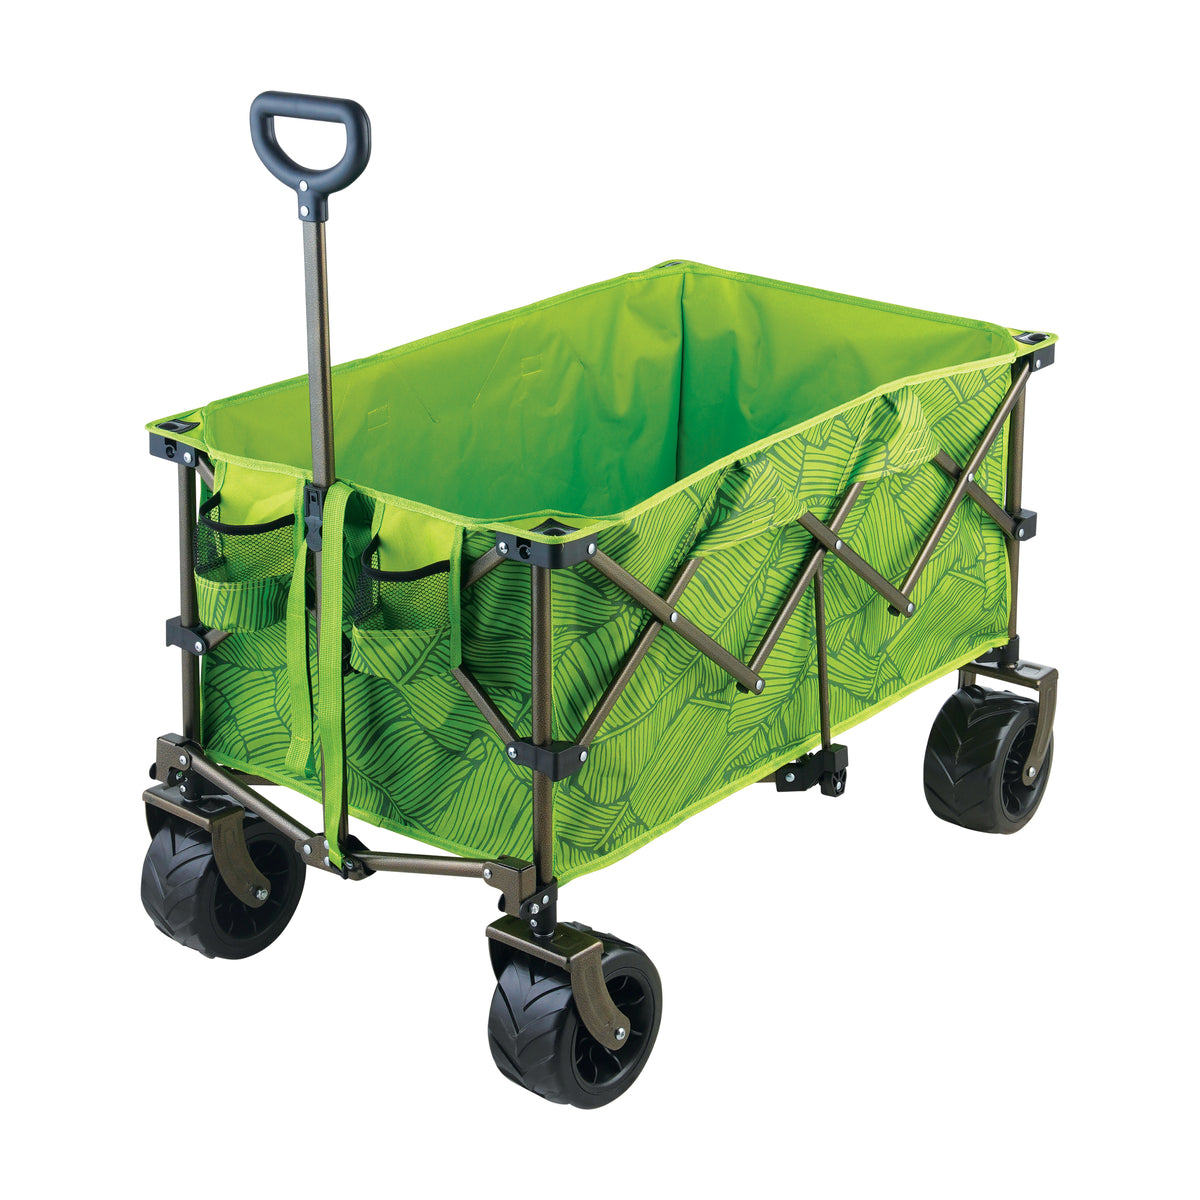 Bliss Hammocks 36-inch Collapsible Garden Cart/Beach Wagon in the Green Banana Leaves variation.